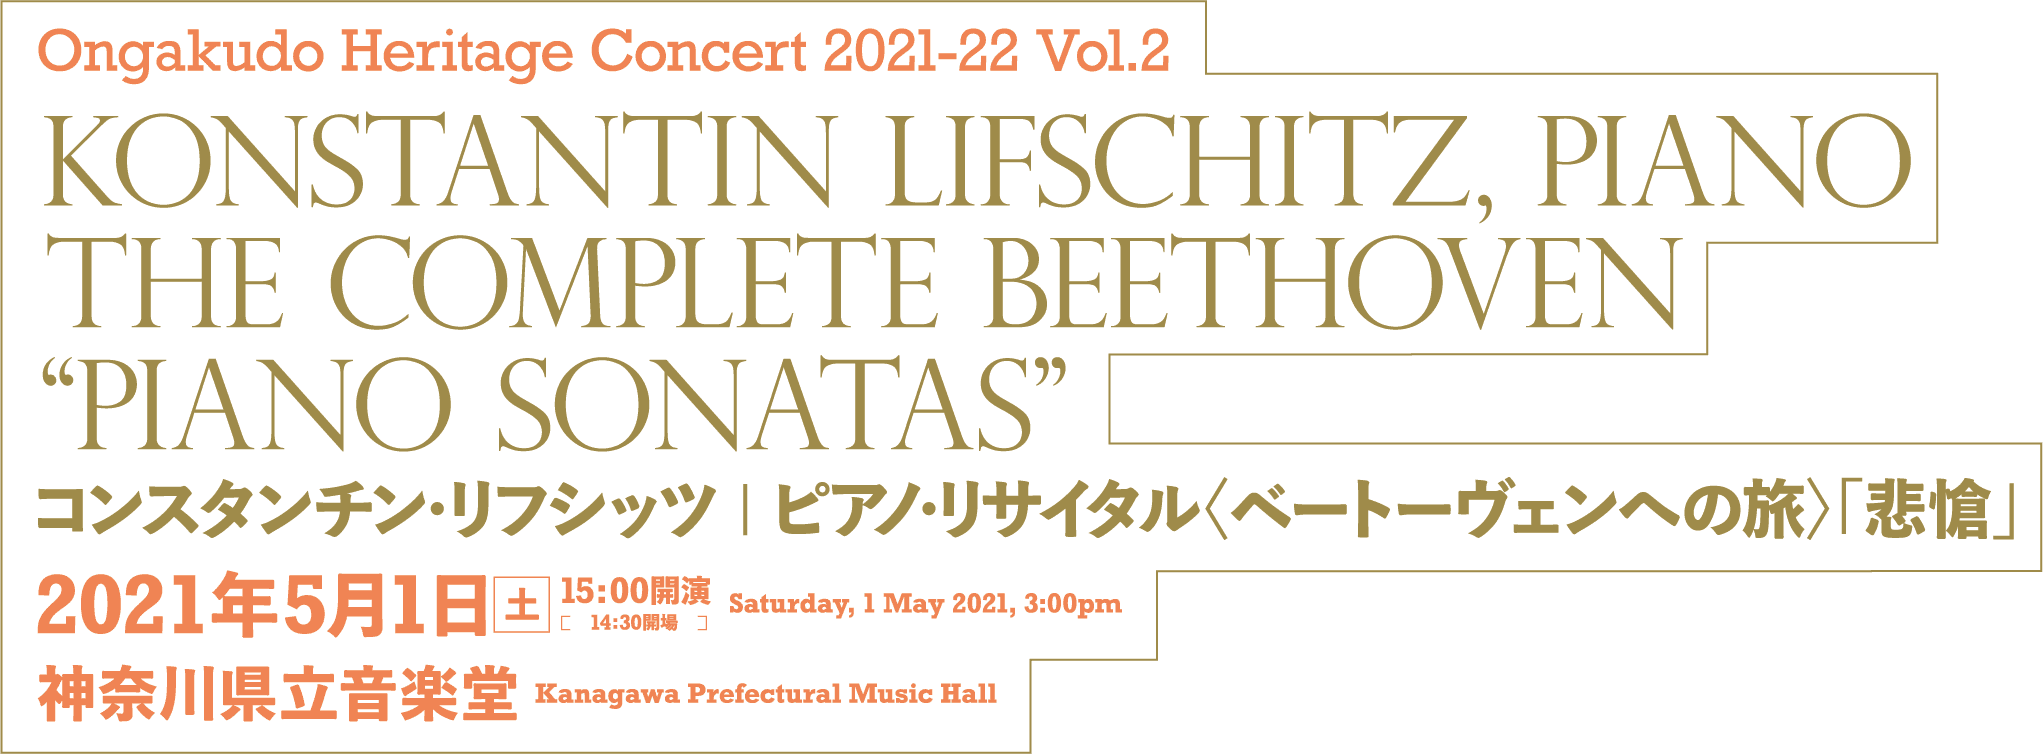 Ongakudo Heritage Concert 2021-22 Vol.2 Konstantin Lifschitz, Piano The Complete BEETHOVEN “Piano Sonatas